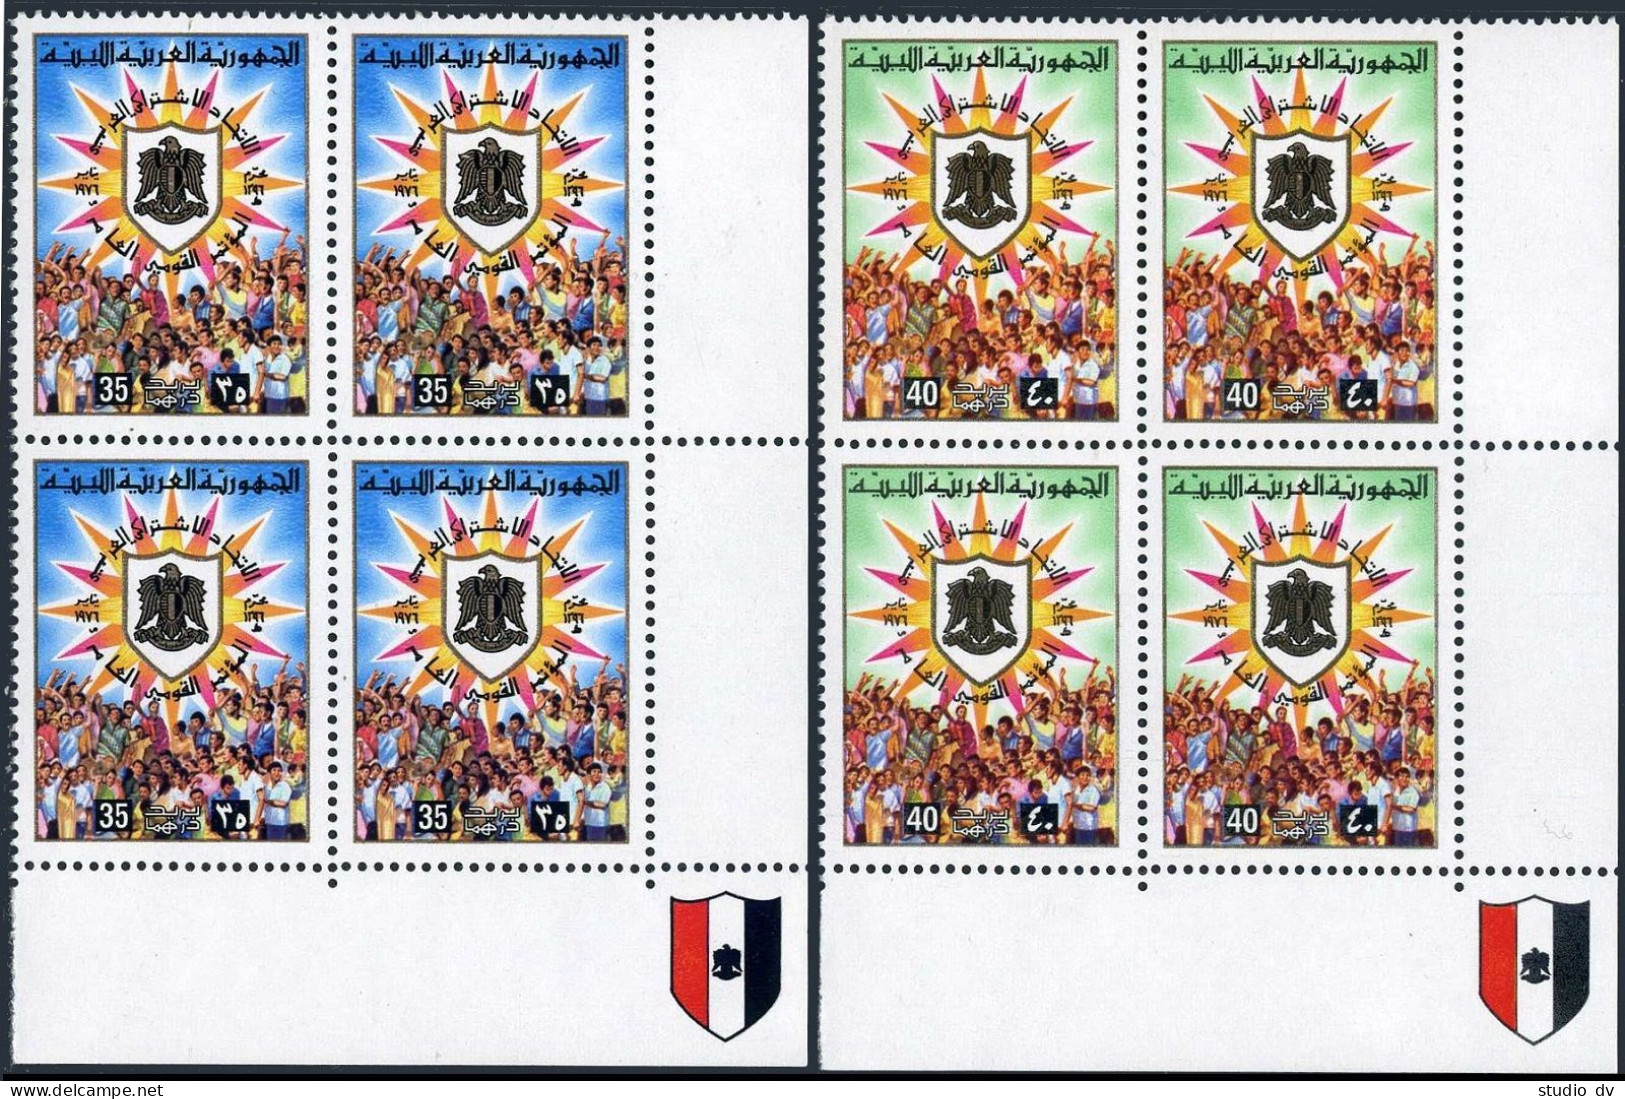 Libya 591-592 Blocks/4, MNH. Mi 504-505. National Congress, 1976. Arms, People. - Libye